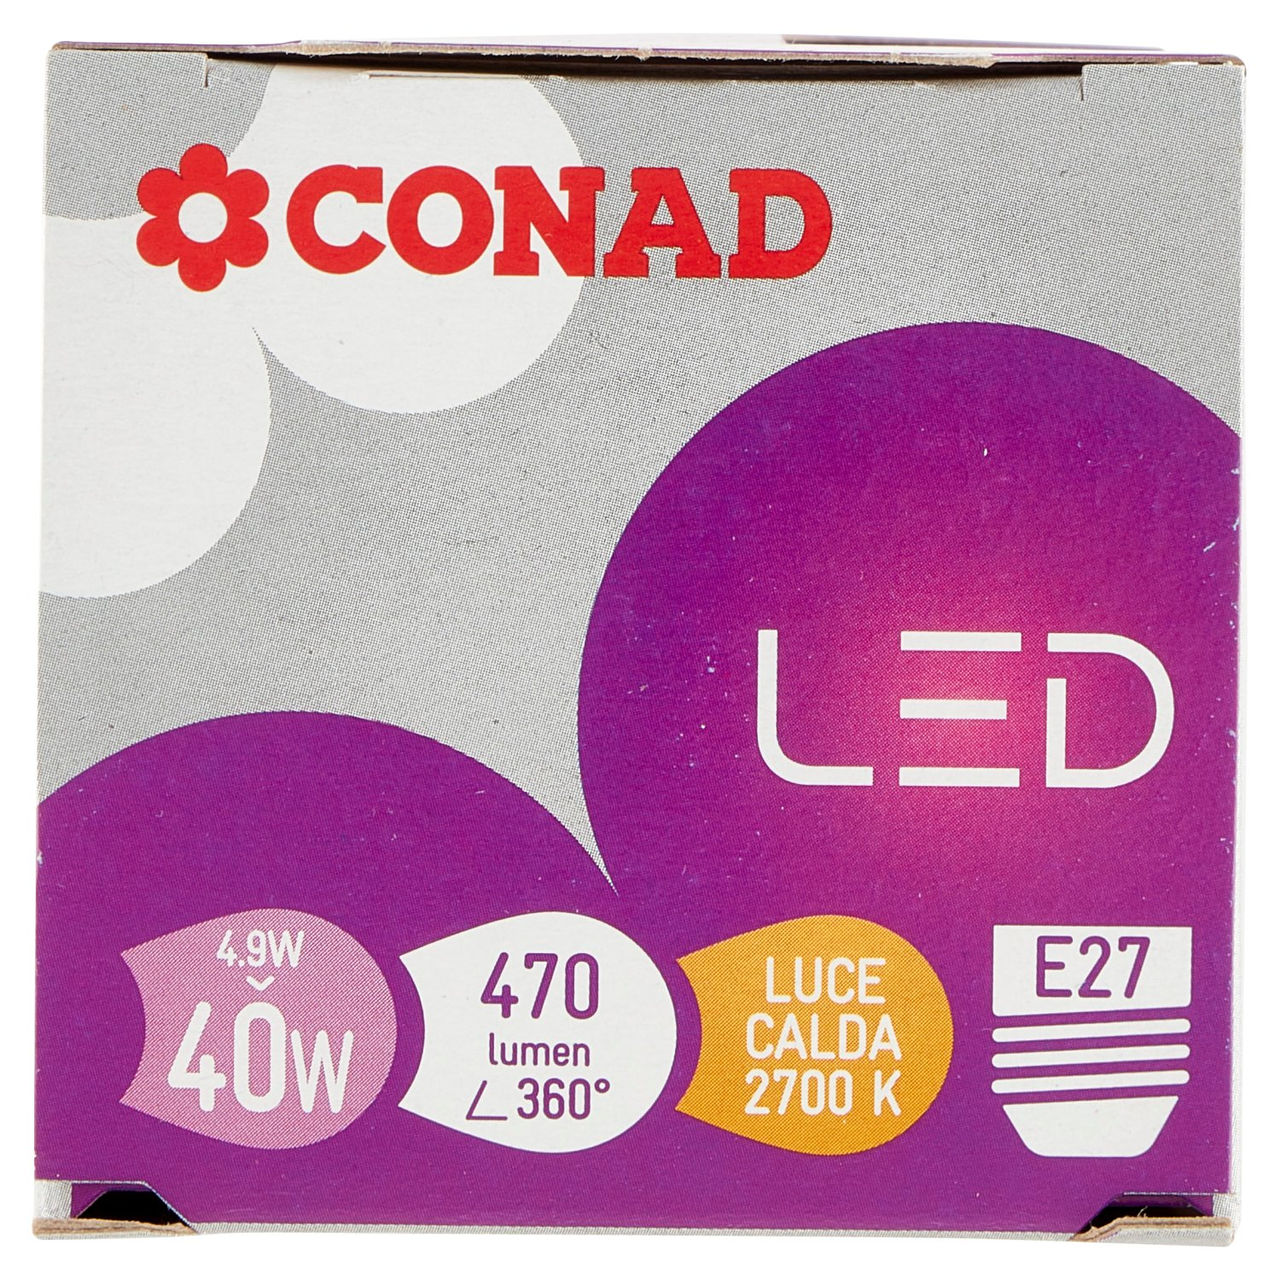 CONAD Led 4,9W 470 Lumen E27 Luce Calda